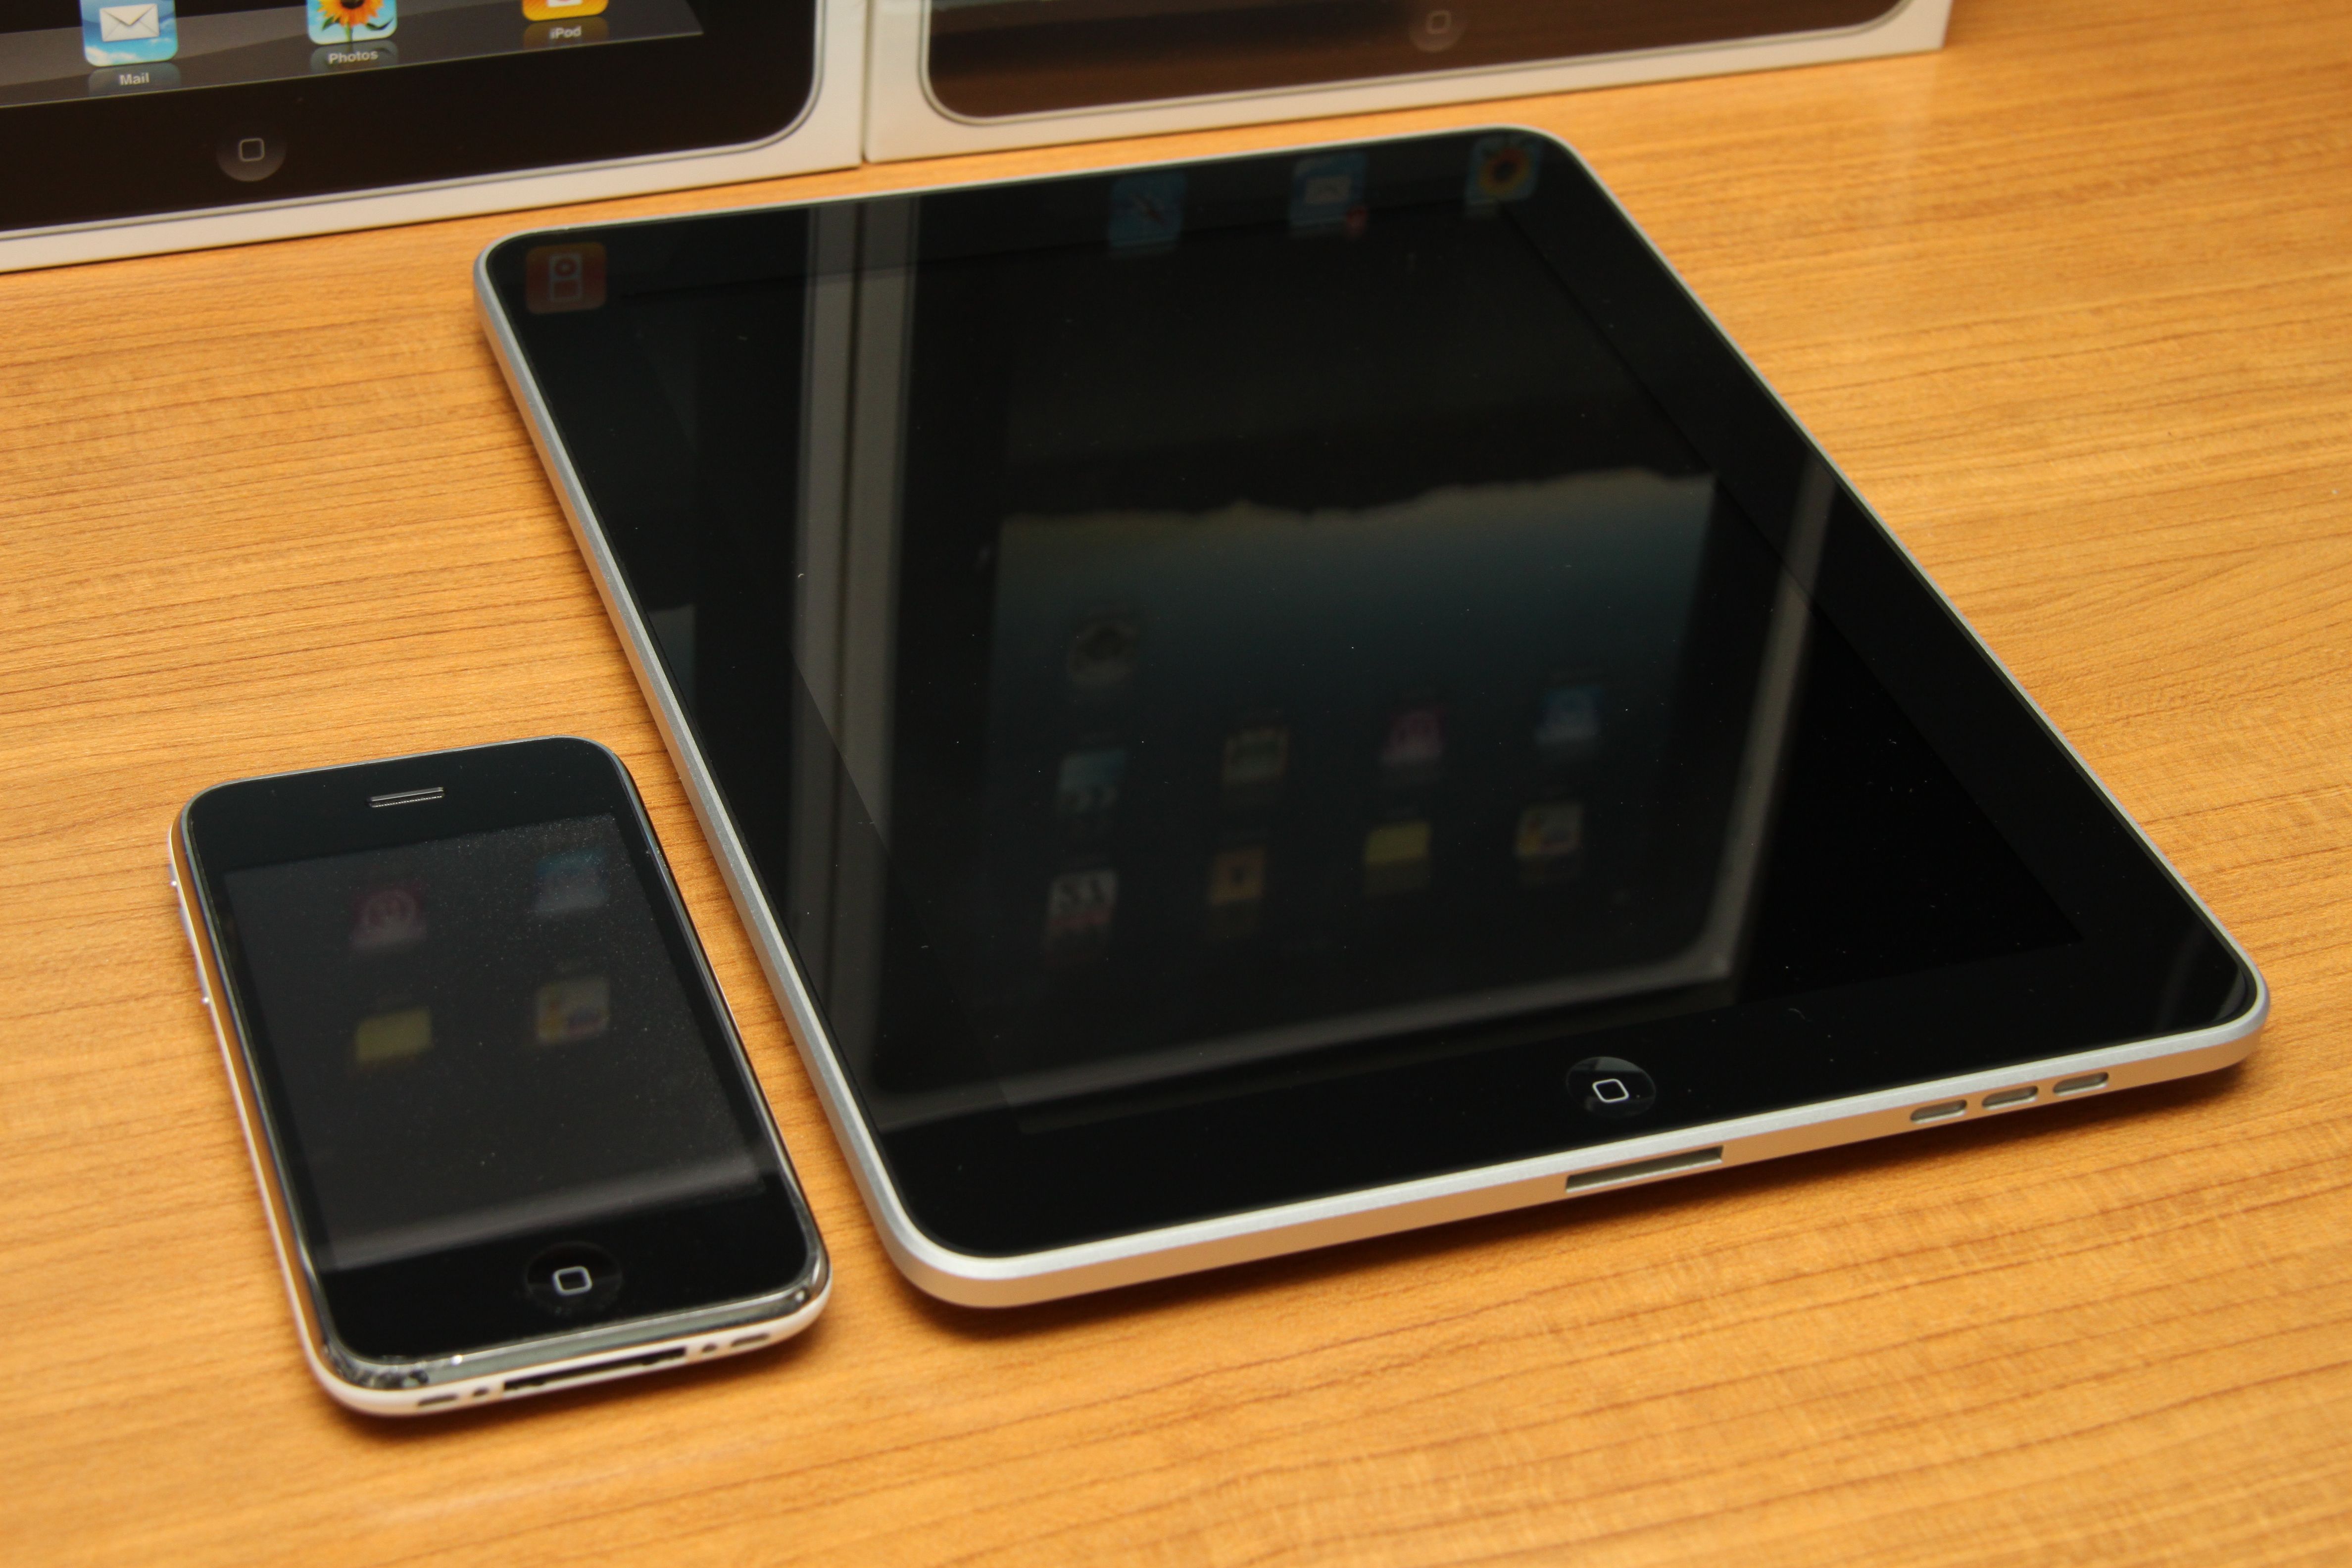 An image an iPhone and an iPad 